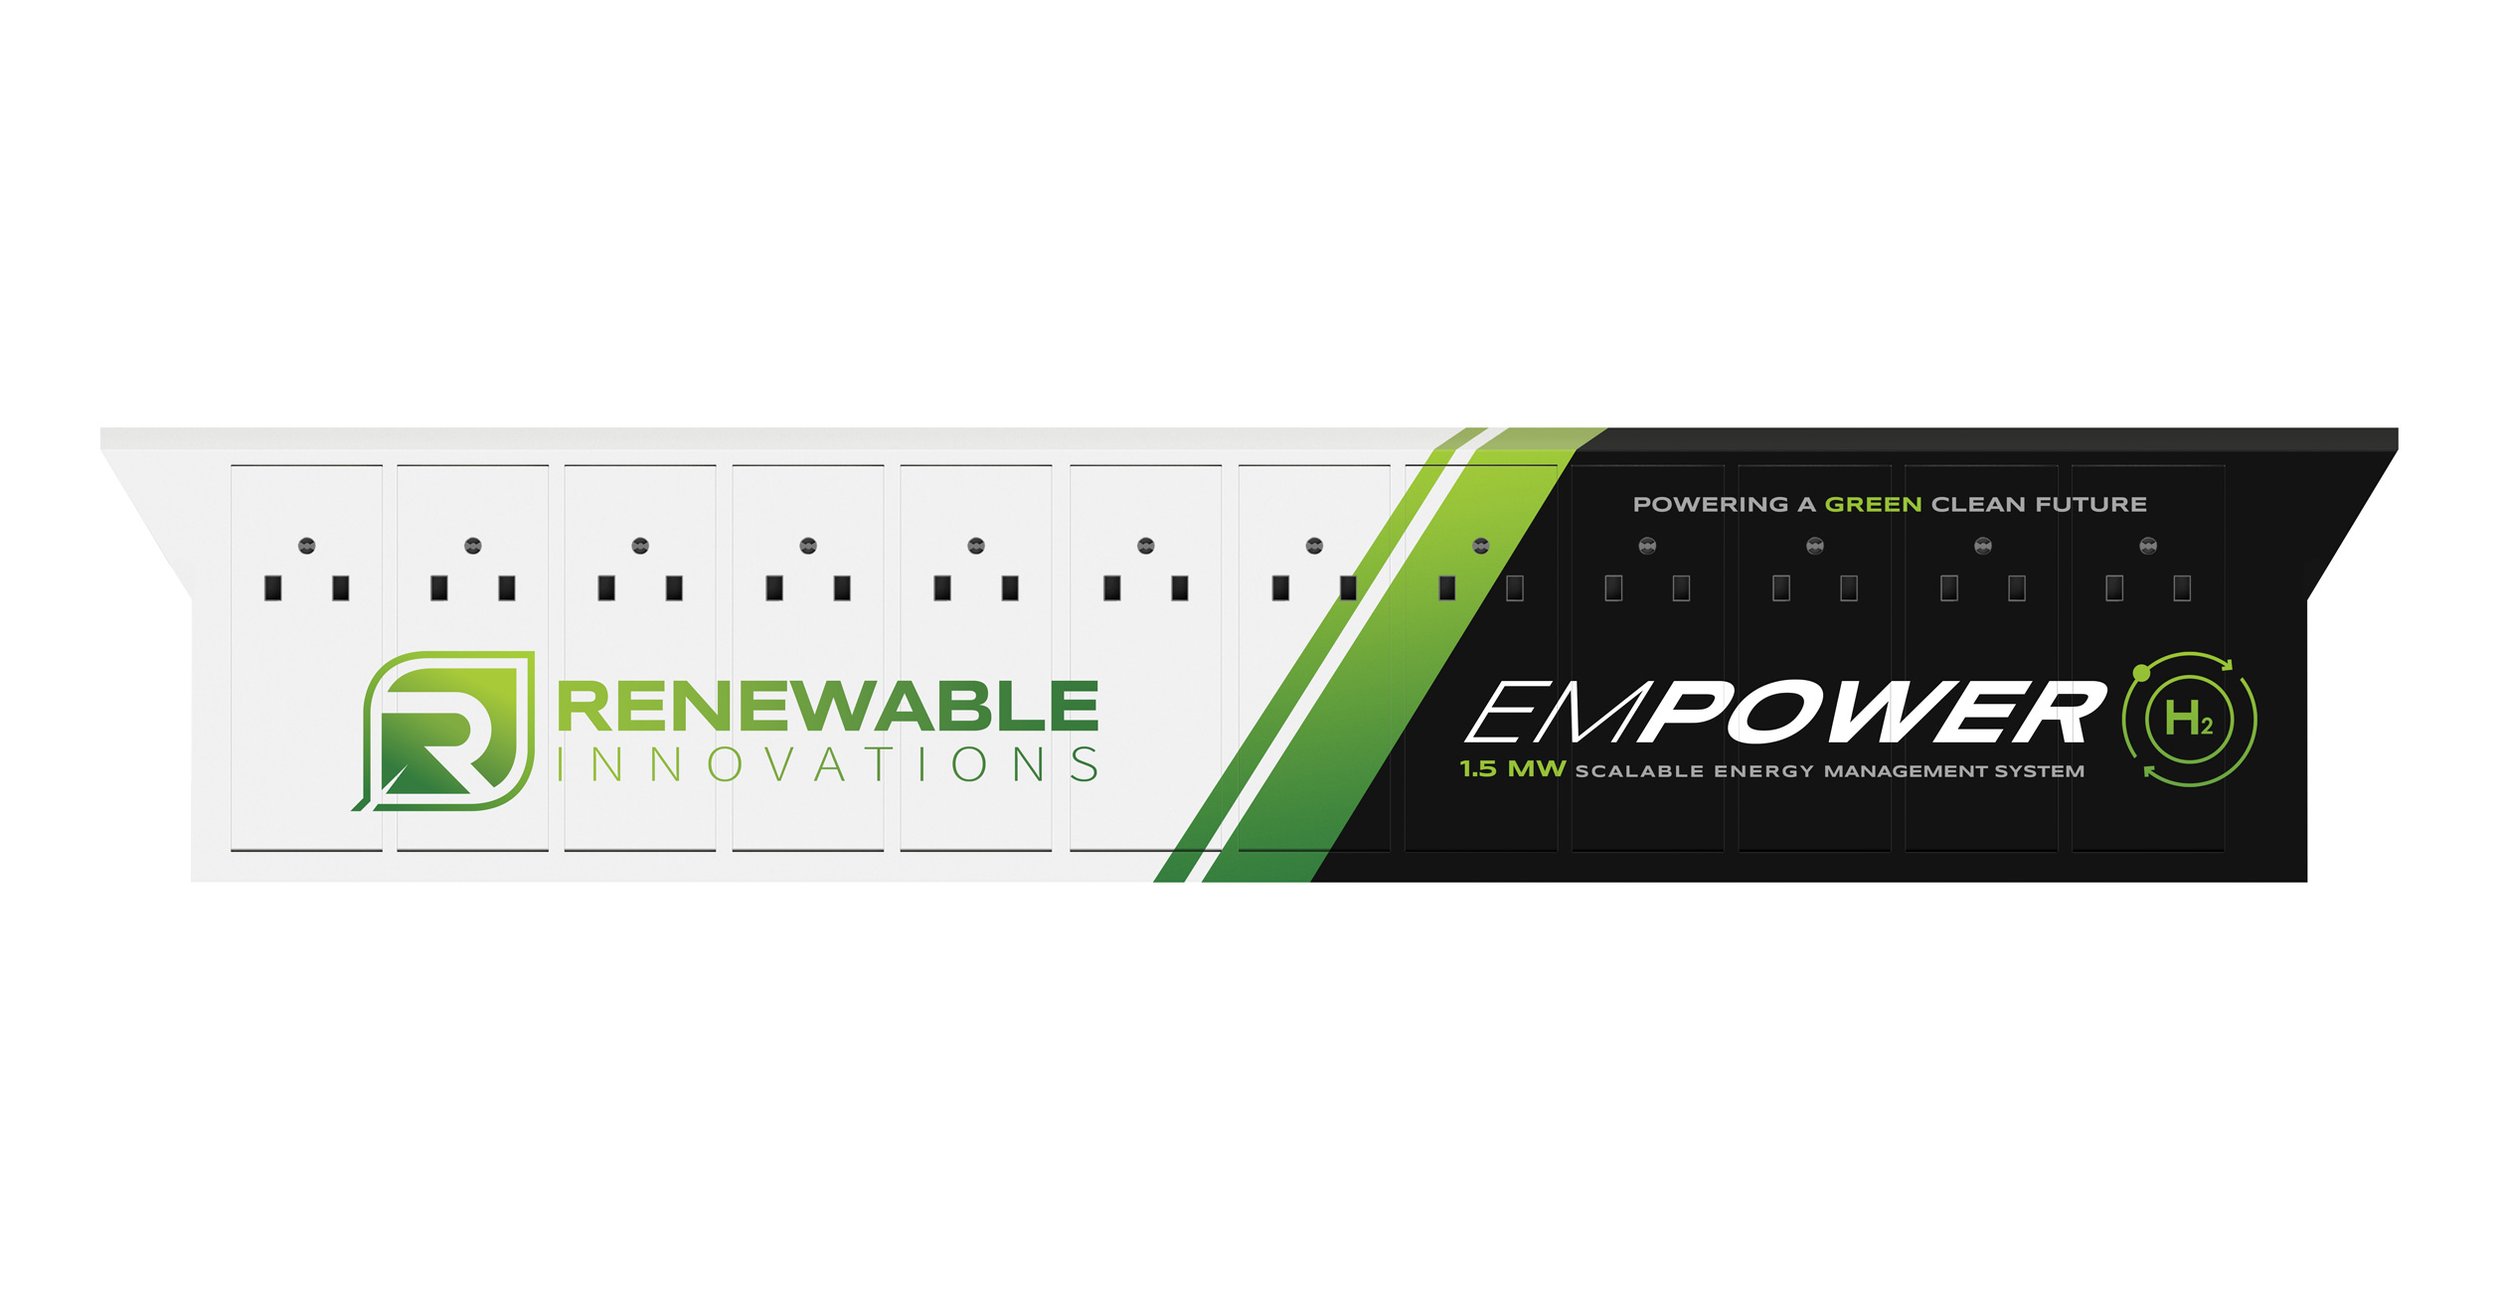 EmPower Hydrogen Power Module 1.0 & 1.5MW (Copy)